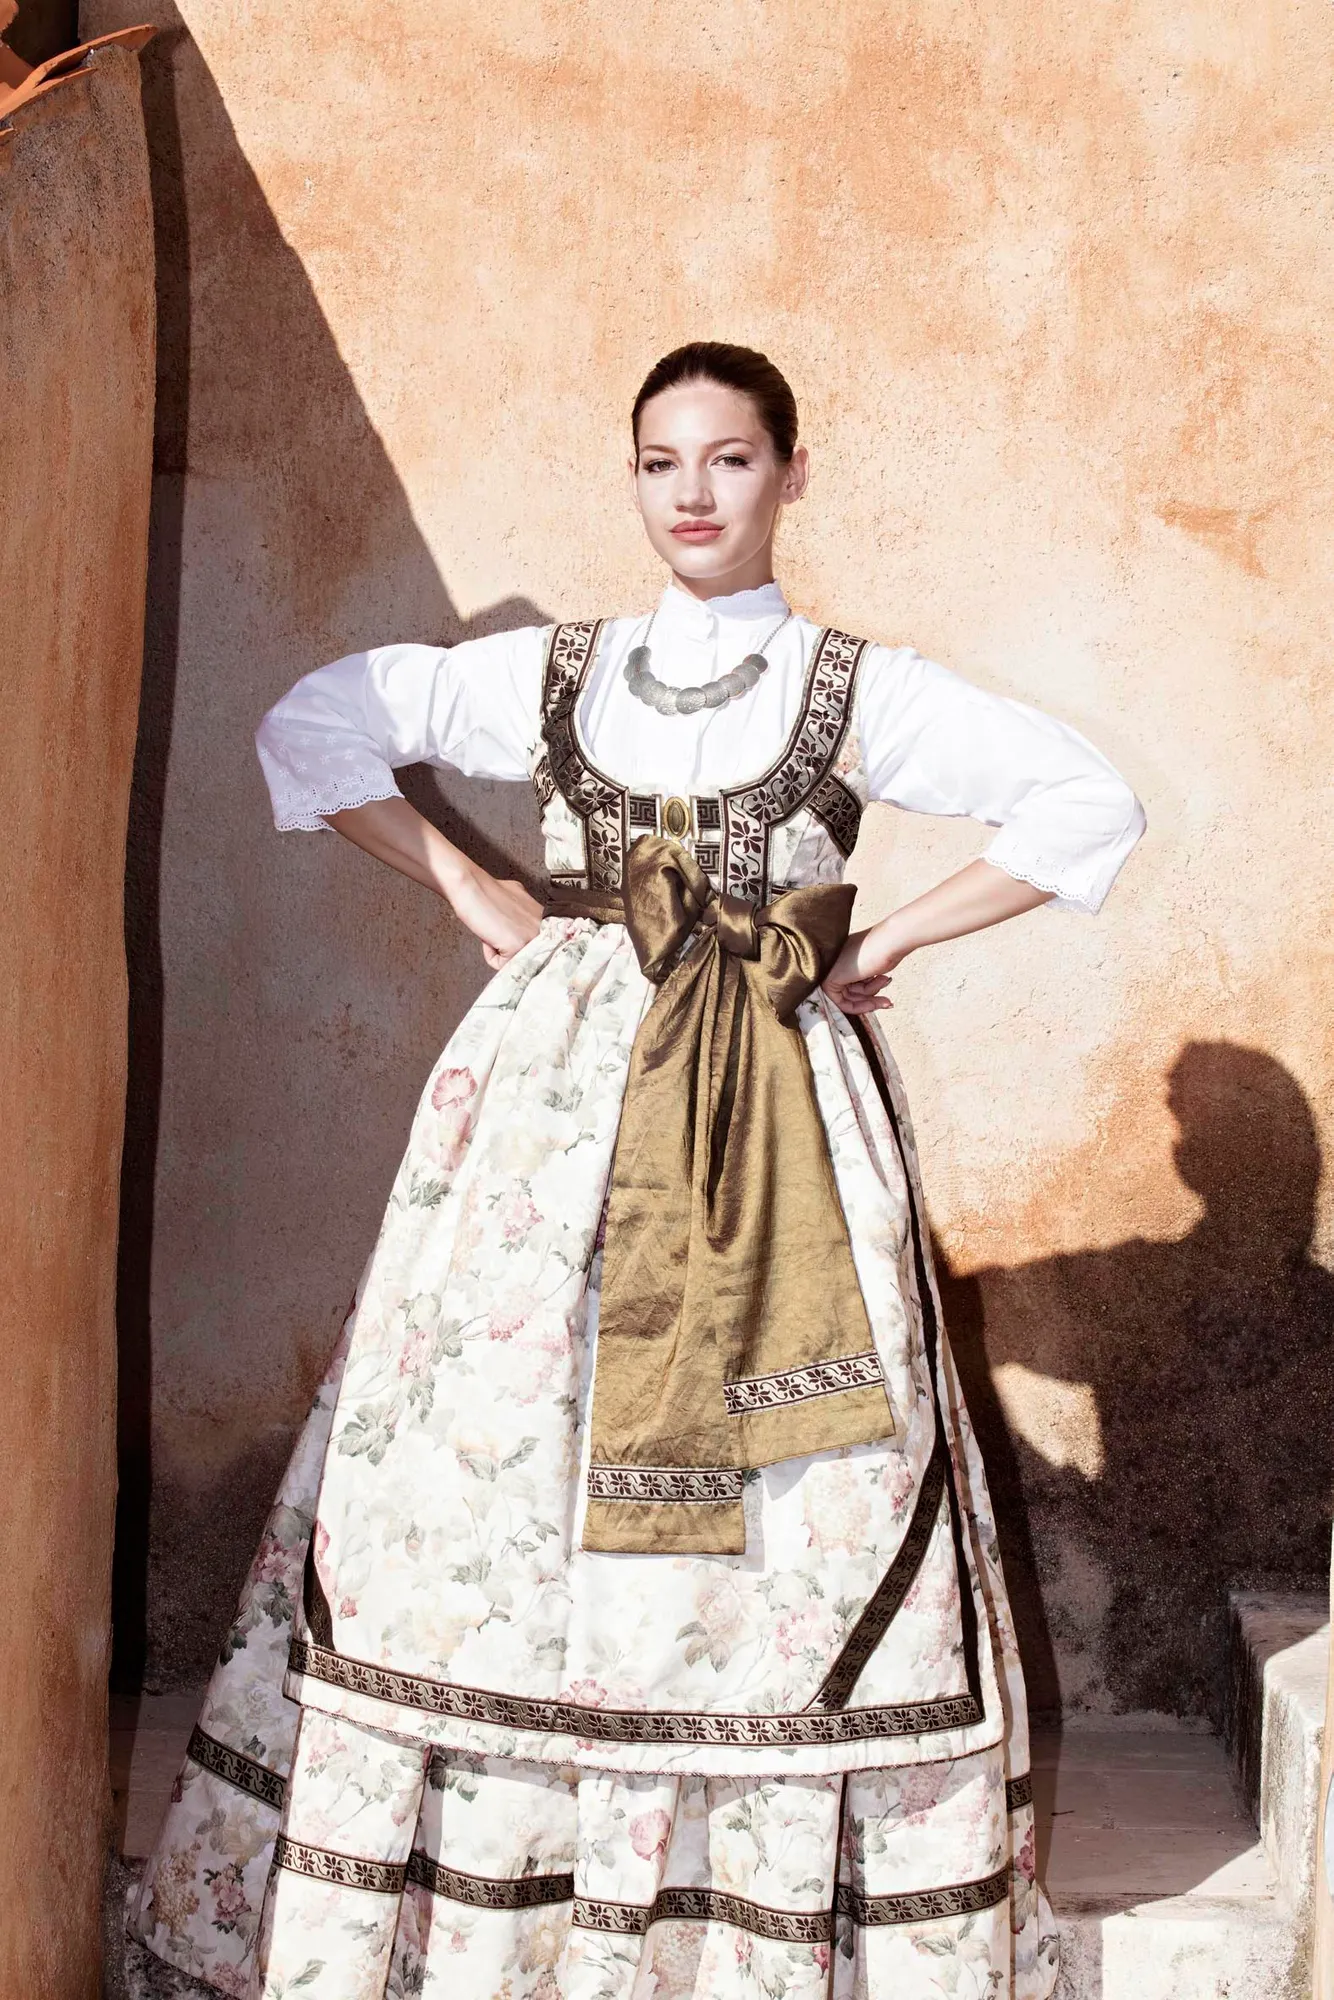 Most beautiful Croatian in folk costume outside Croatia is crowned